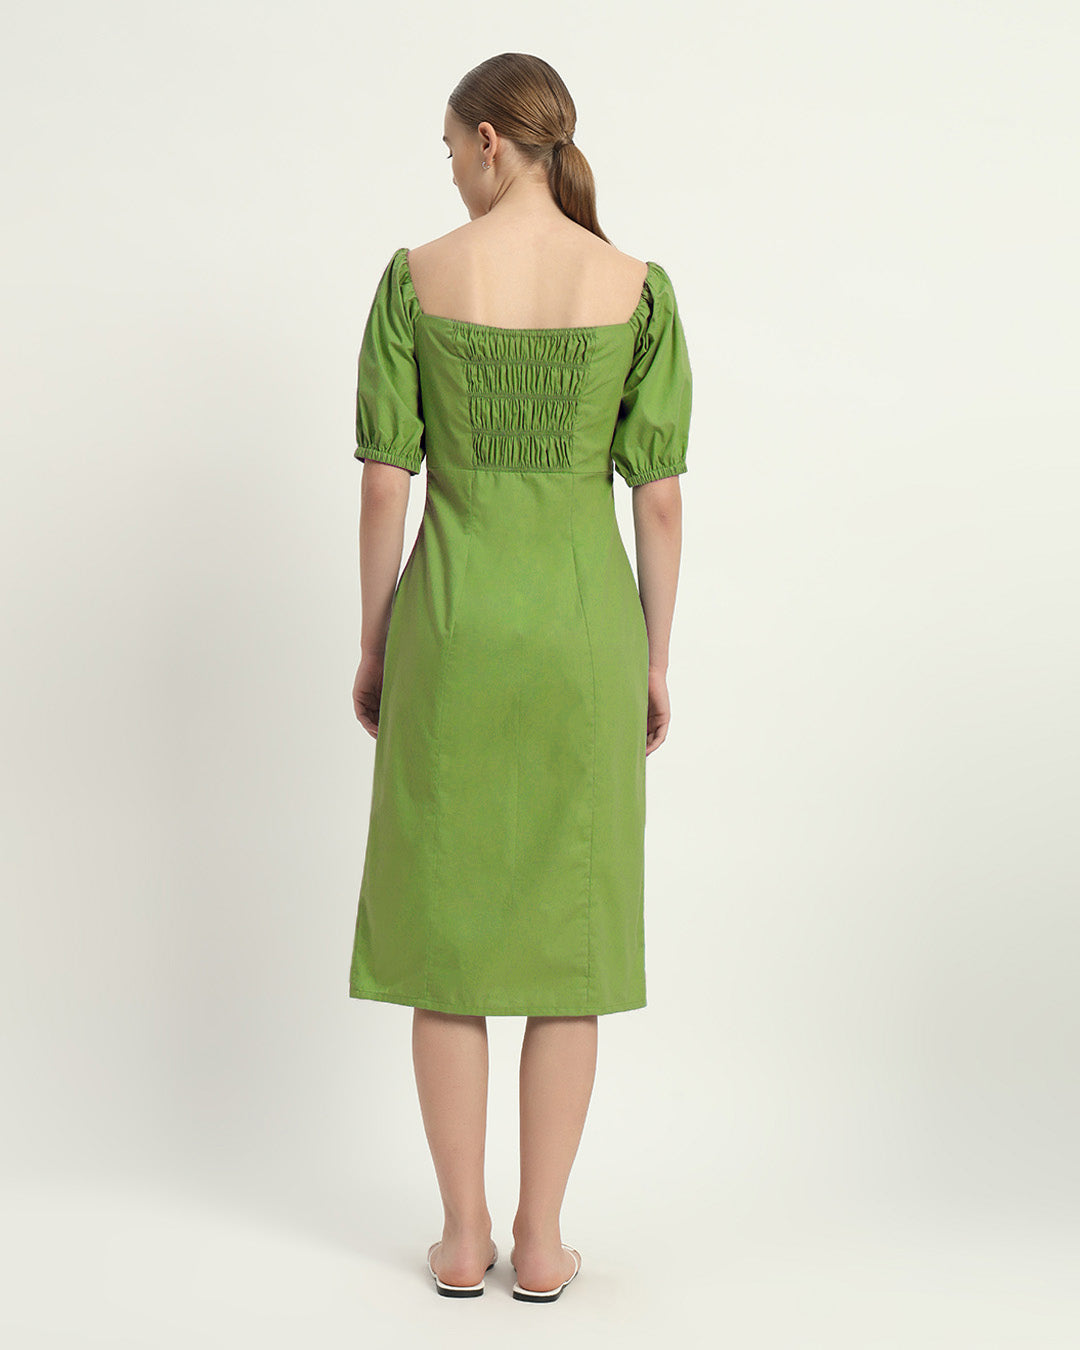 The Fern Erwin Cotton Dress